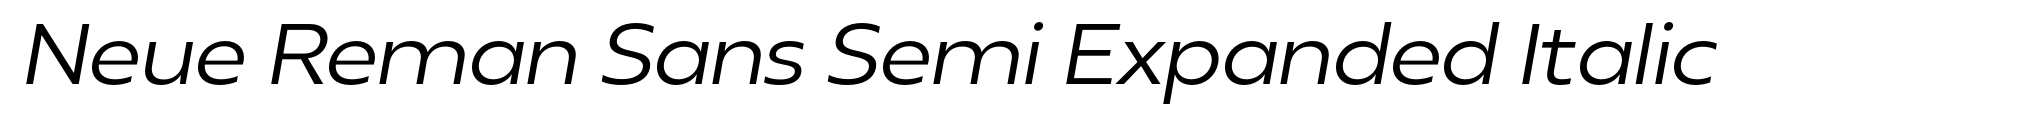 Neue Reman Sans Semi Expanded Italic image